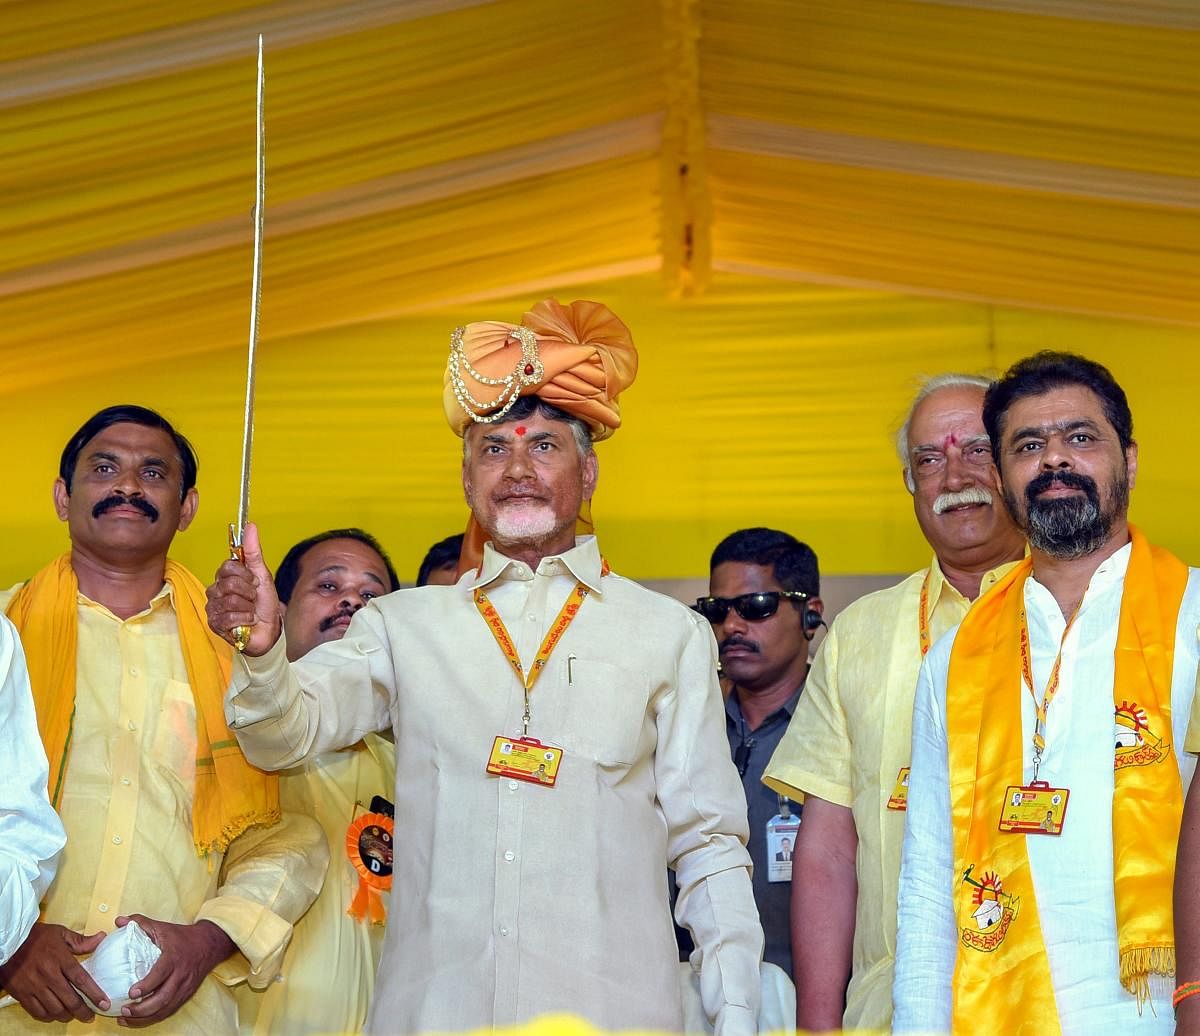 Andhra Pradesh Chief Minister Chandrababu Naidu holds a sword during 'Dharma Porata Deeksha' being held at Produturu, in Kadapa, on Tuesday. PTI